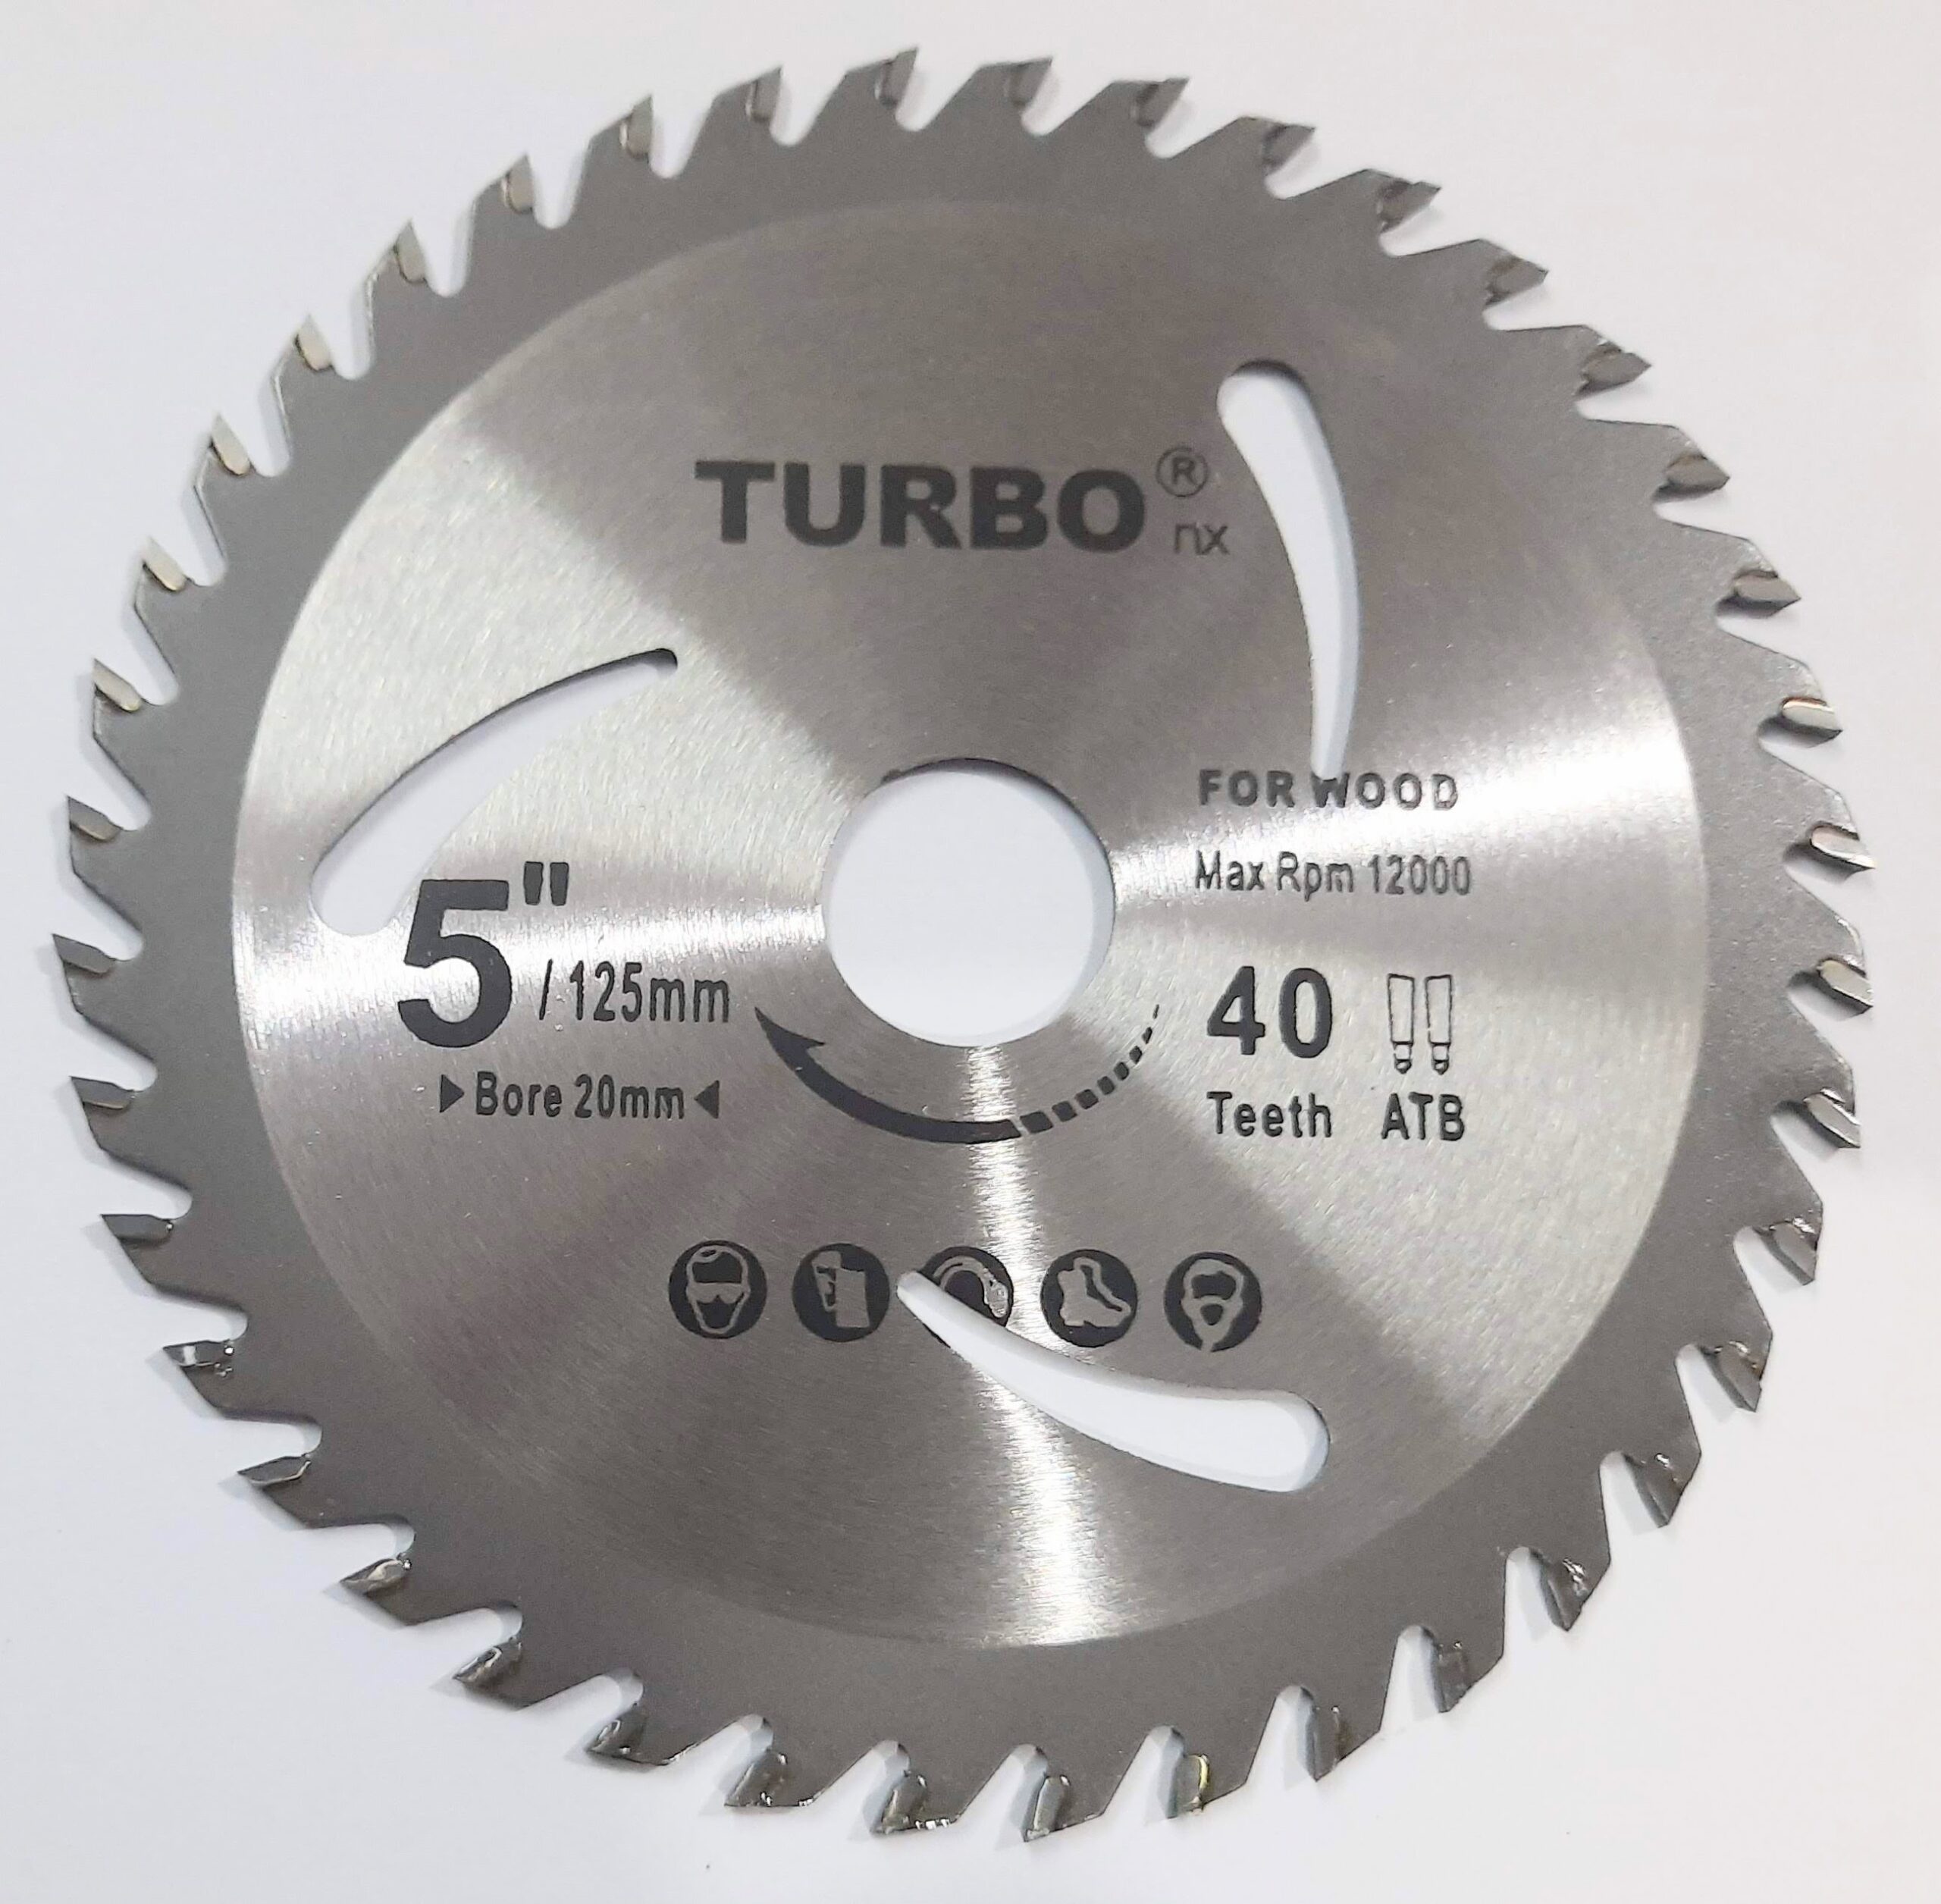 Turbo 125mm TCT Saw Blade 